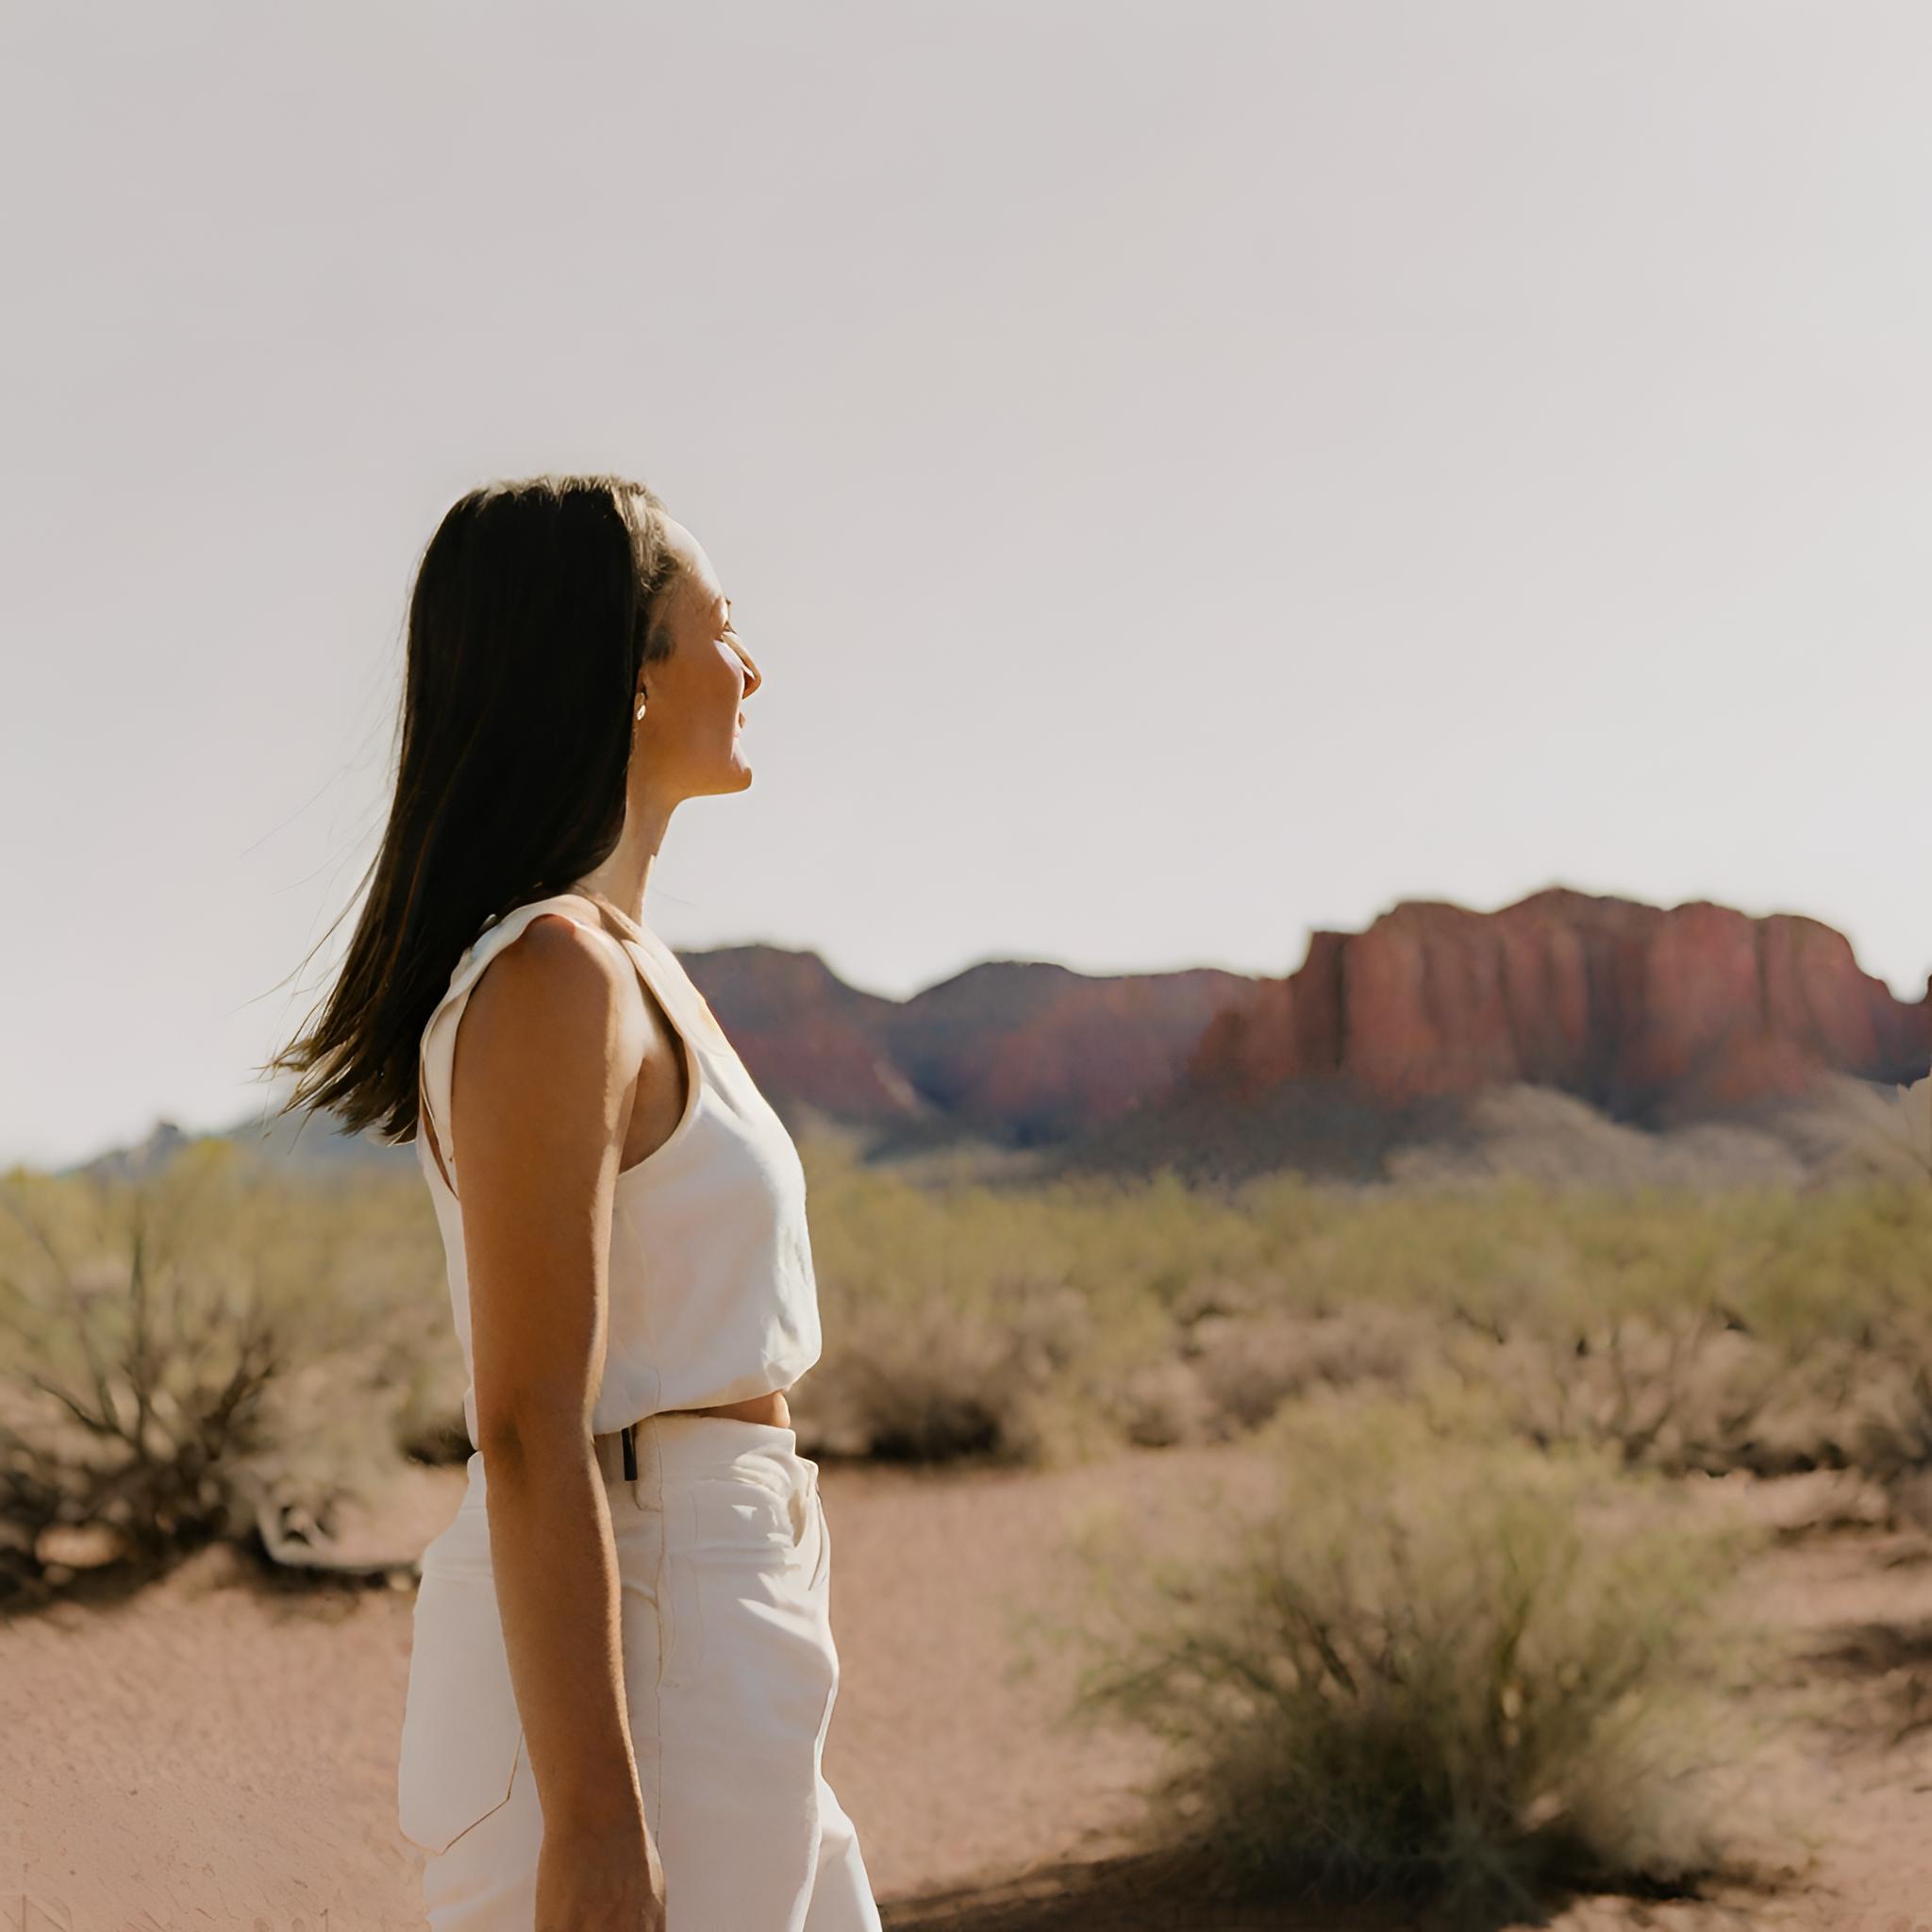 Woman in desert